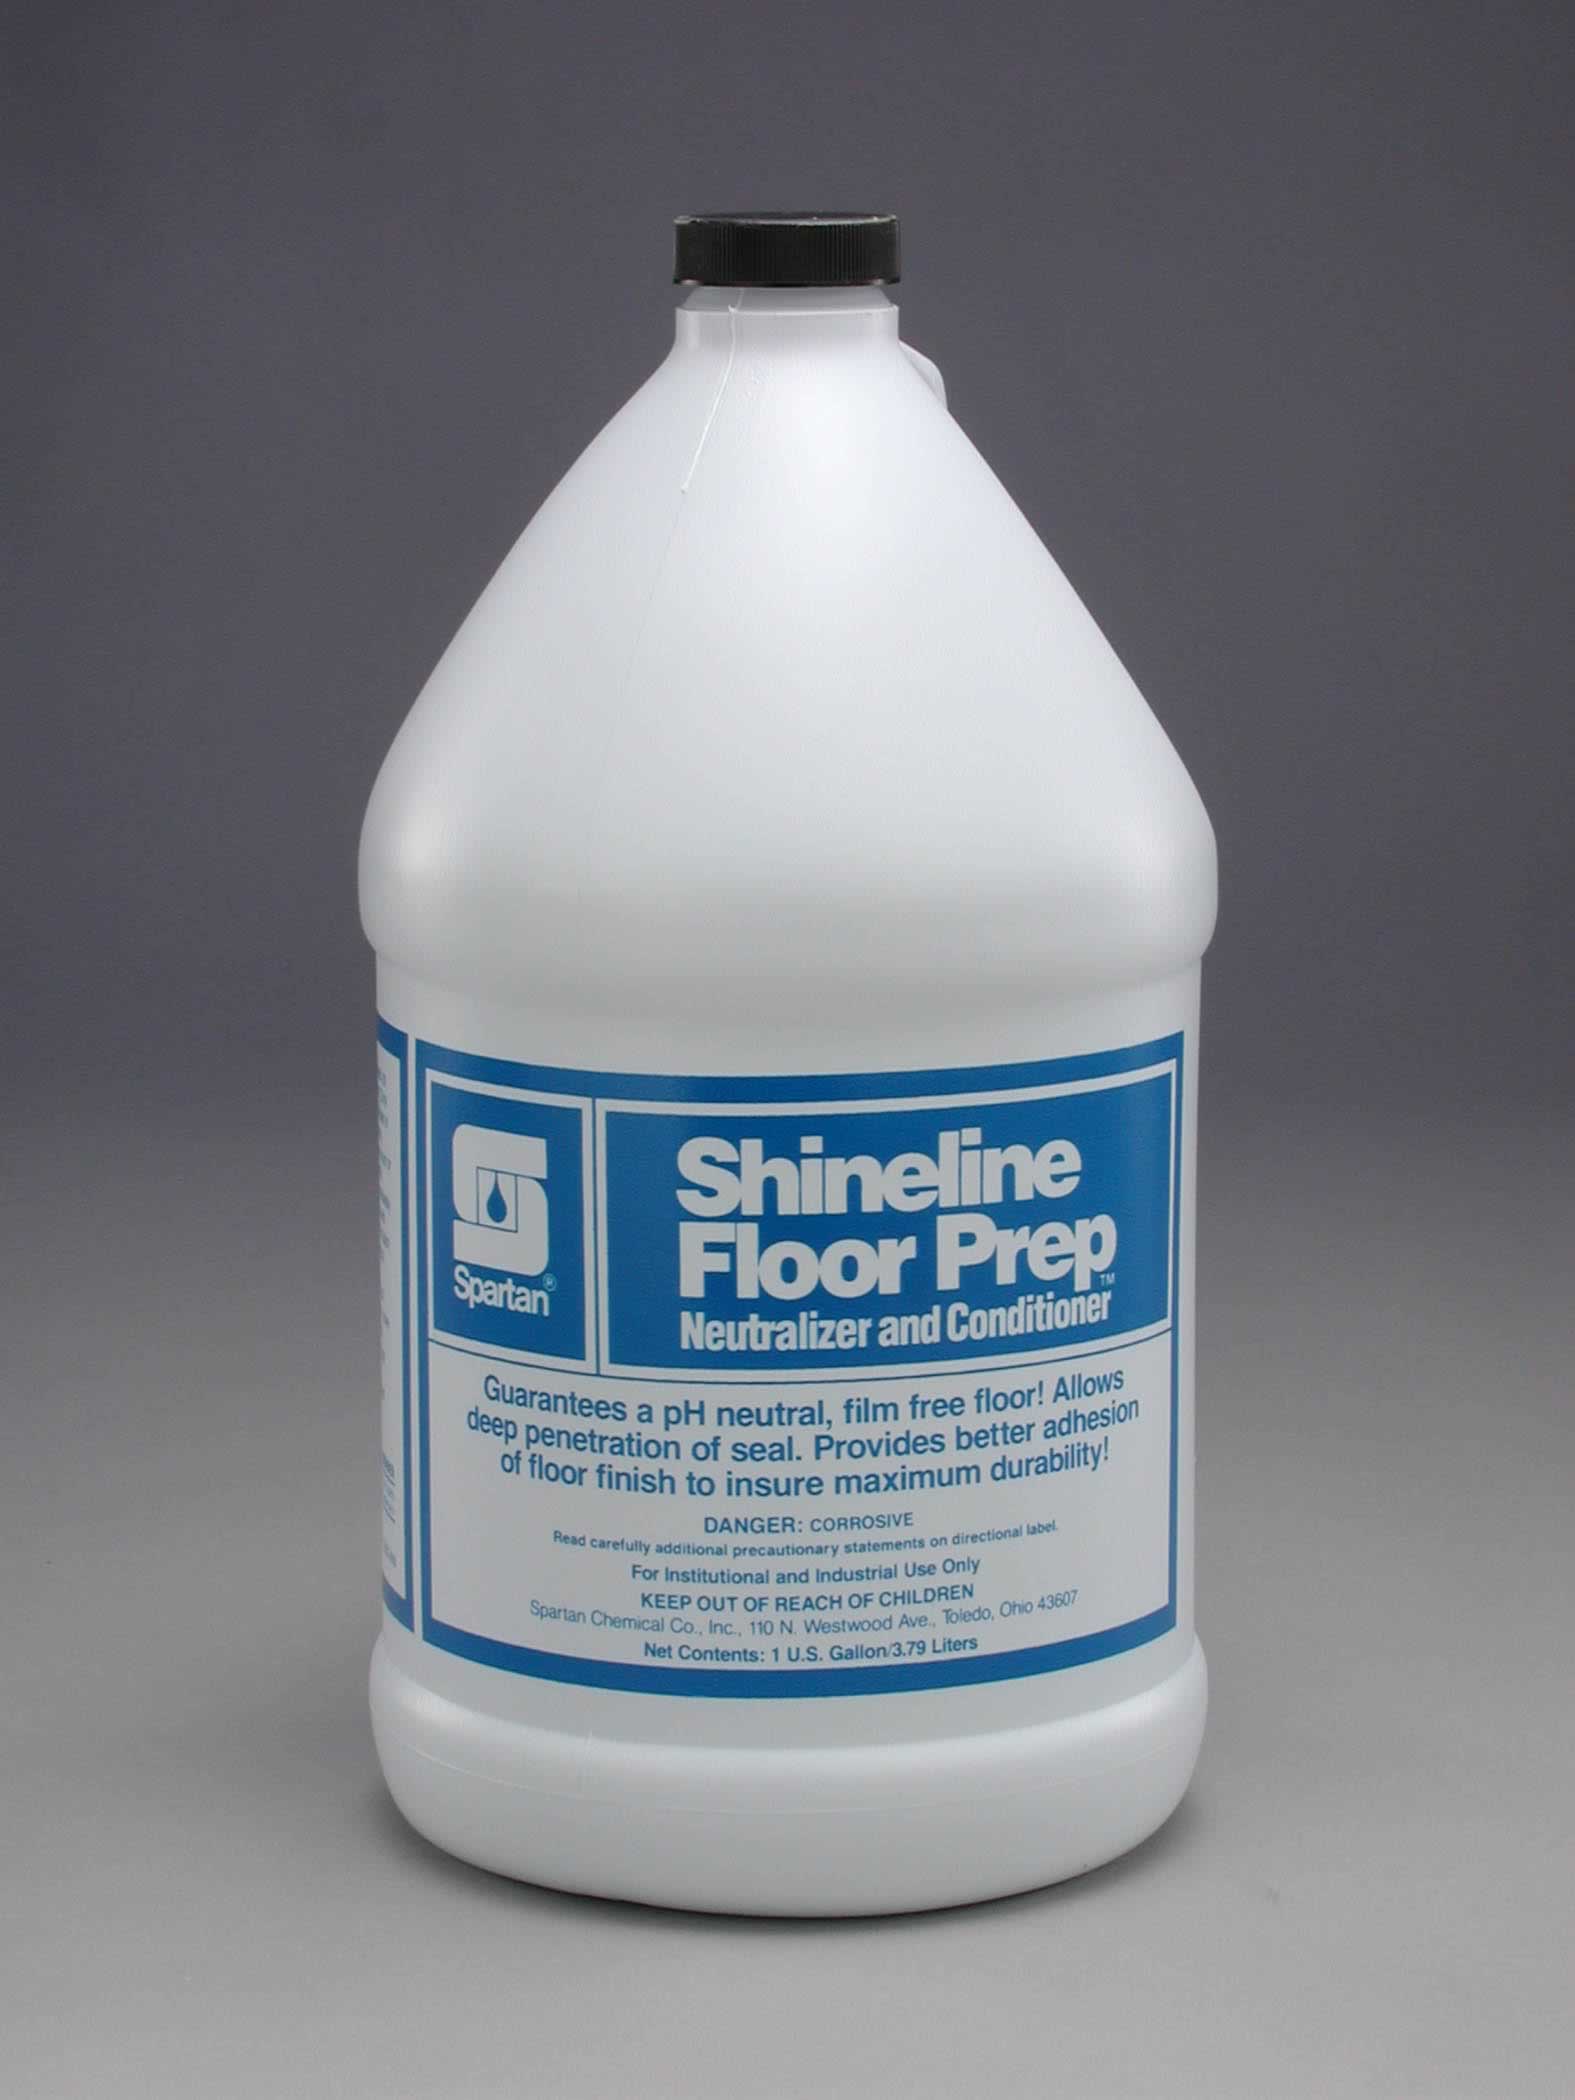 Shineline floor prep neutralizer and conditioner